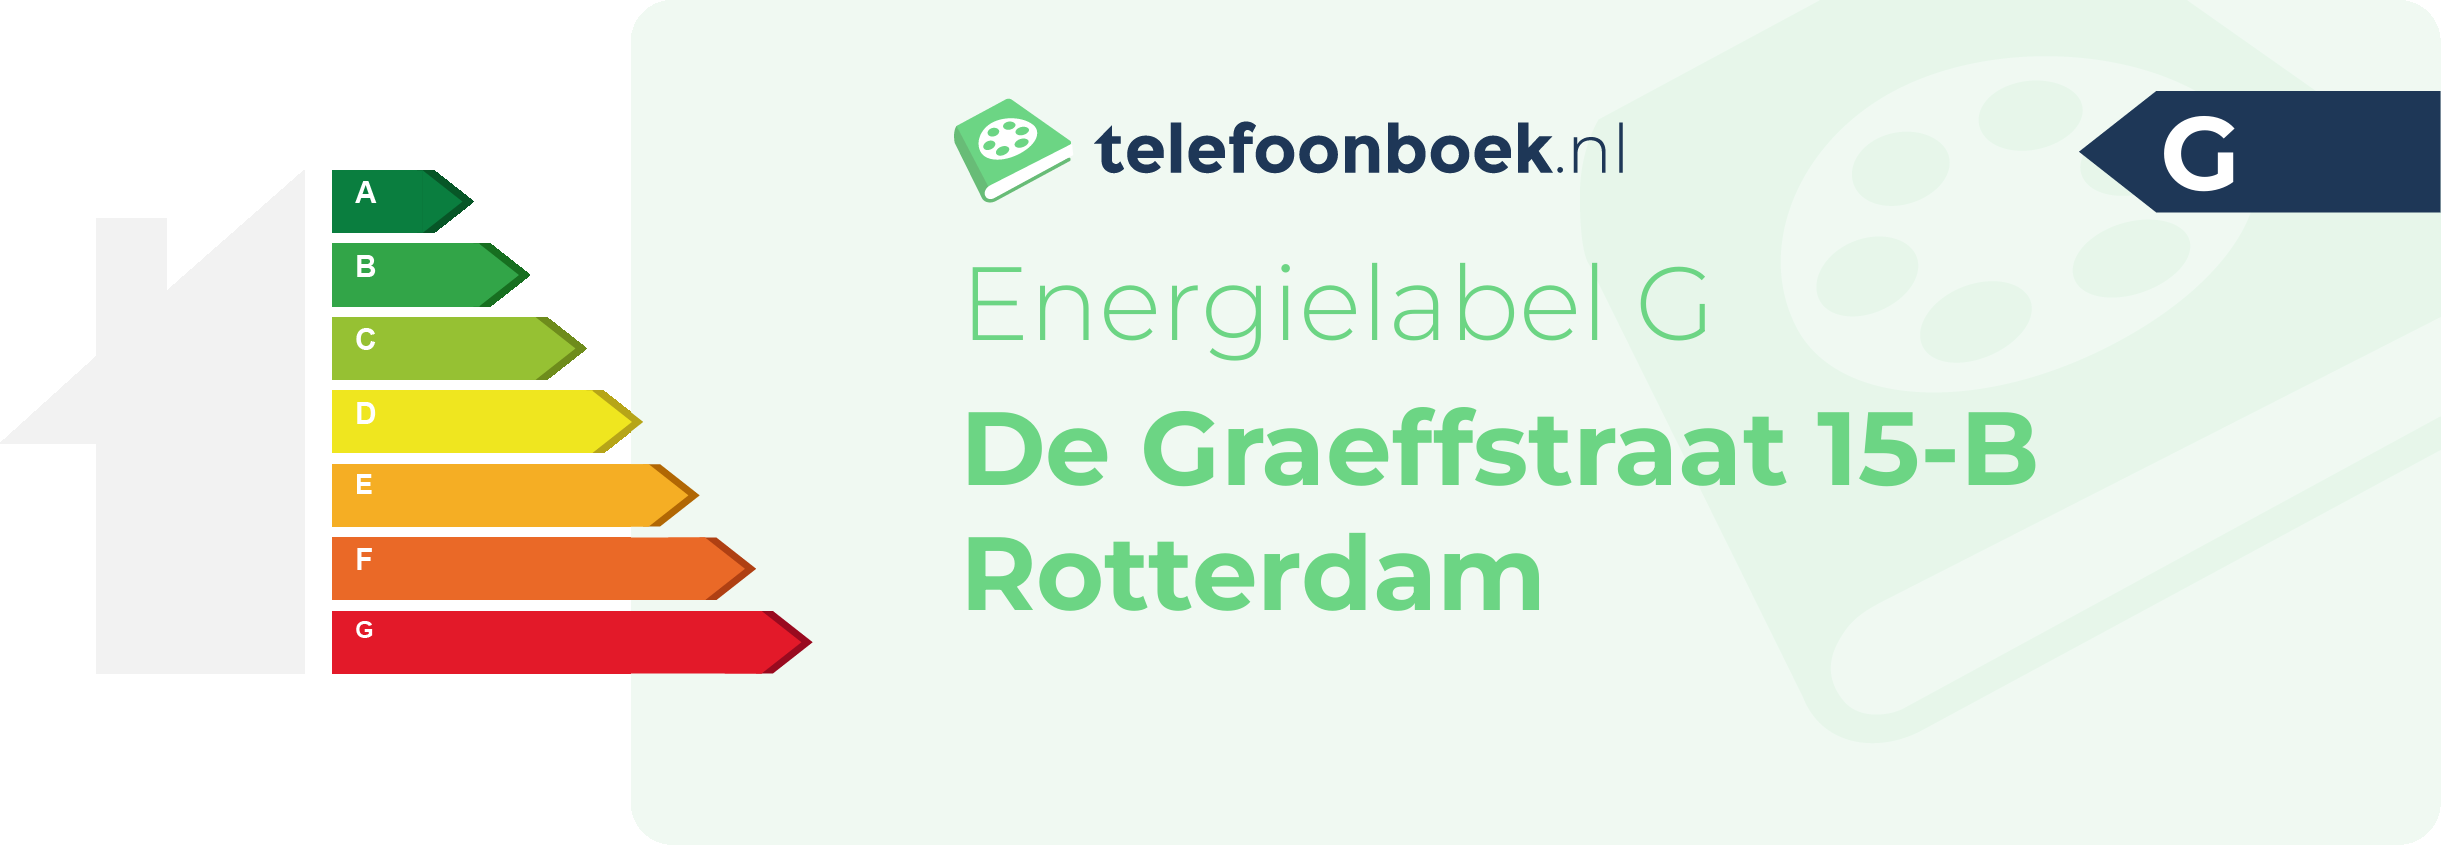 Energielabel De Graeffstraat 15-B Rotterdam